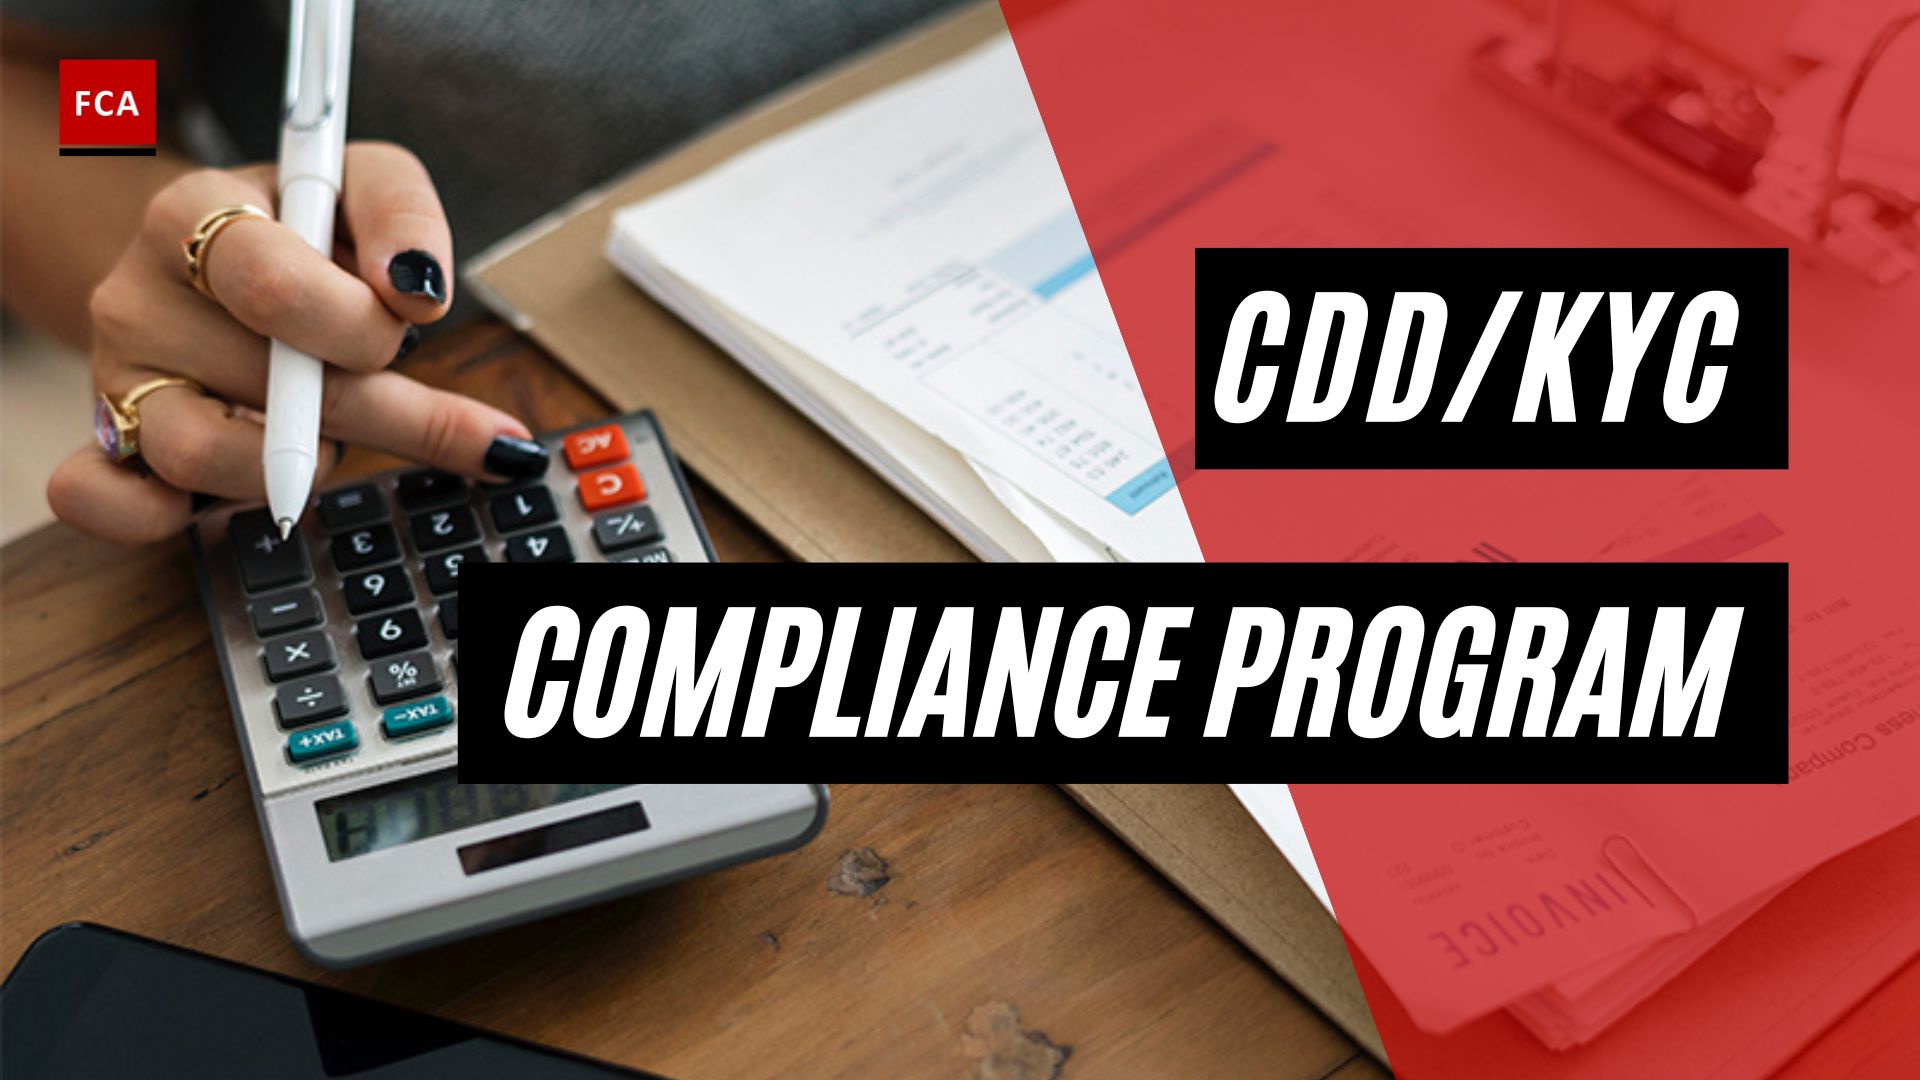 Cdd/Kyc Compliance Program